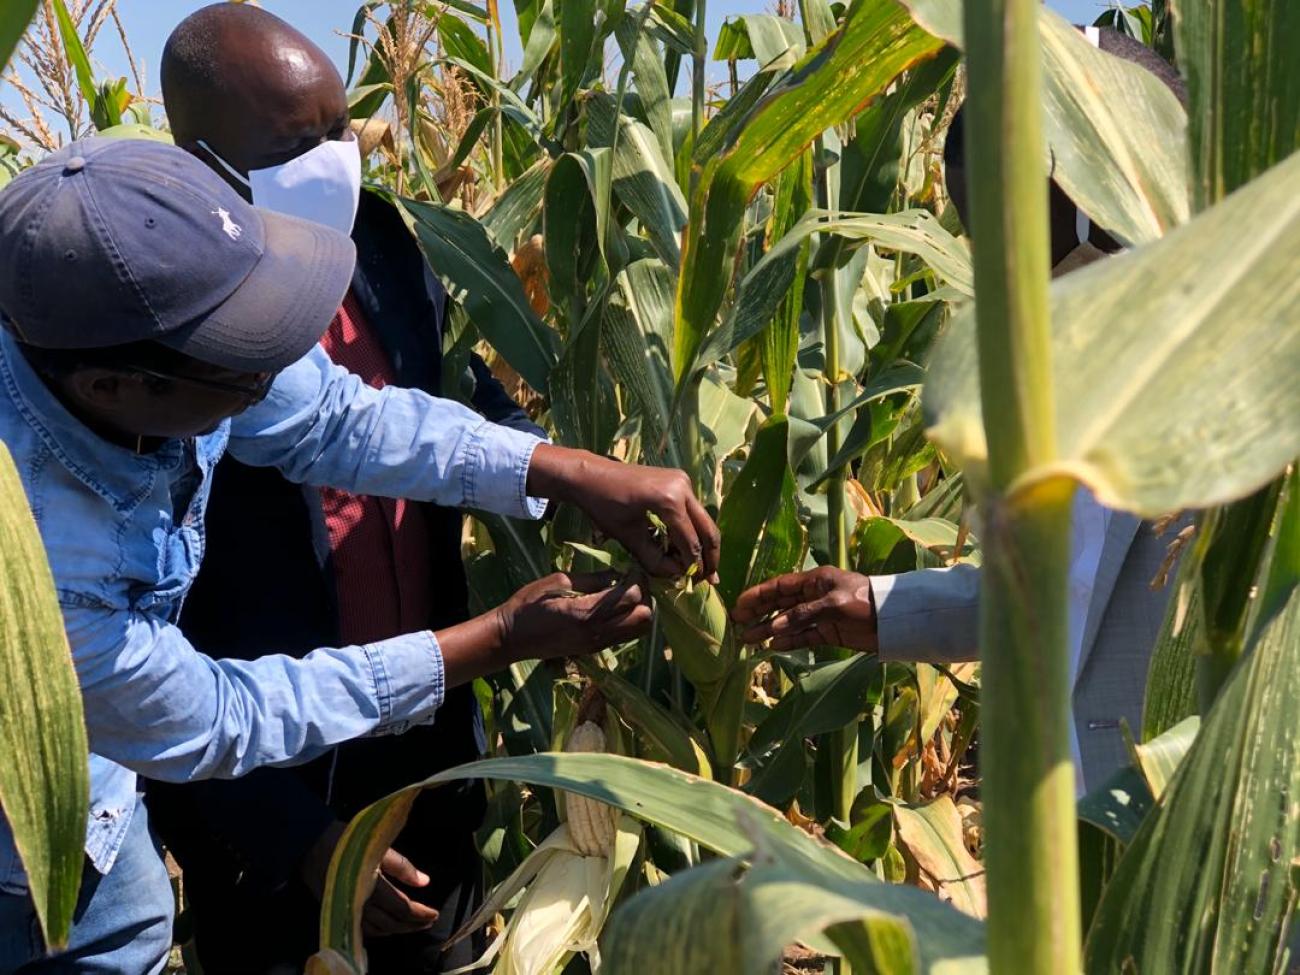  Programme Manager for Operation Werengendje shows the delegation the crops at Uvhungu Vhungu Green Scheme